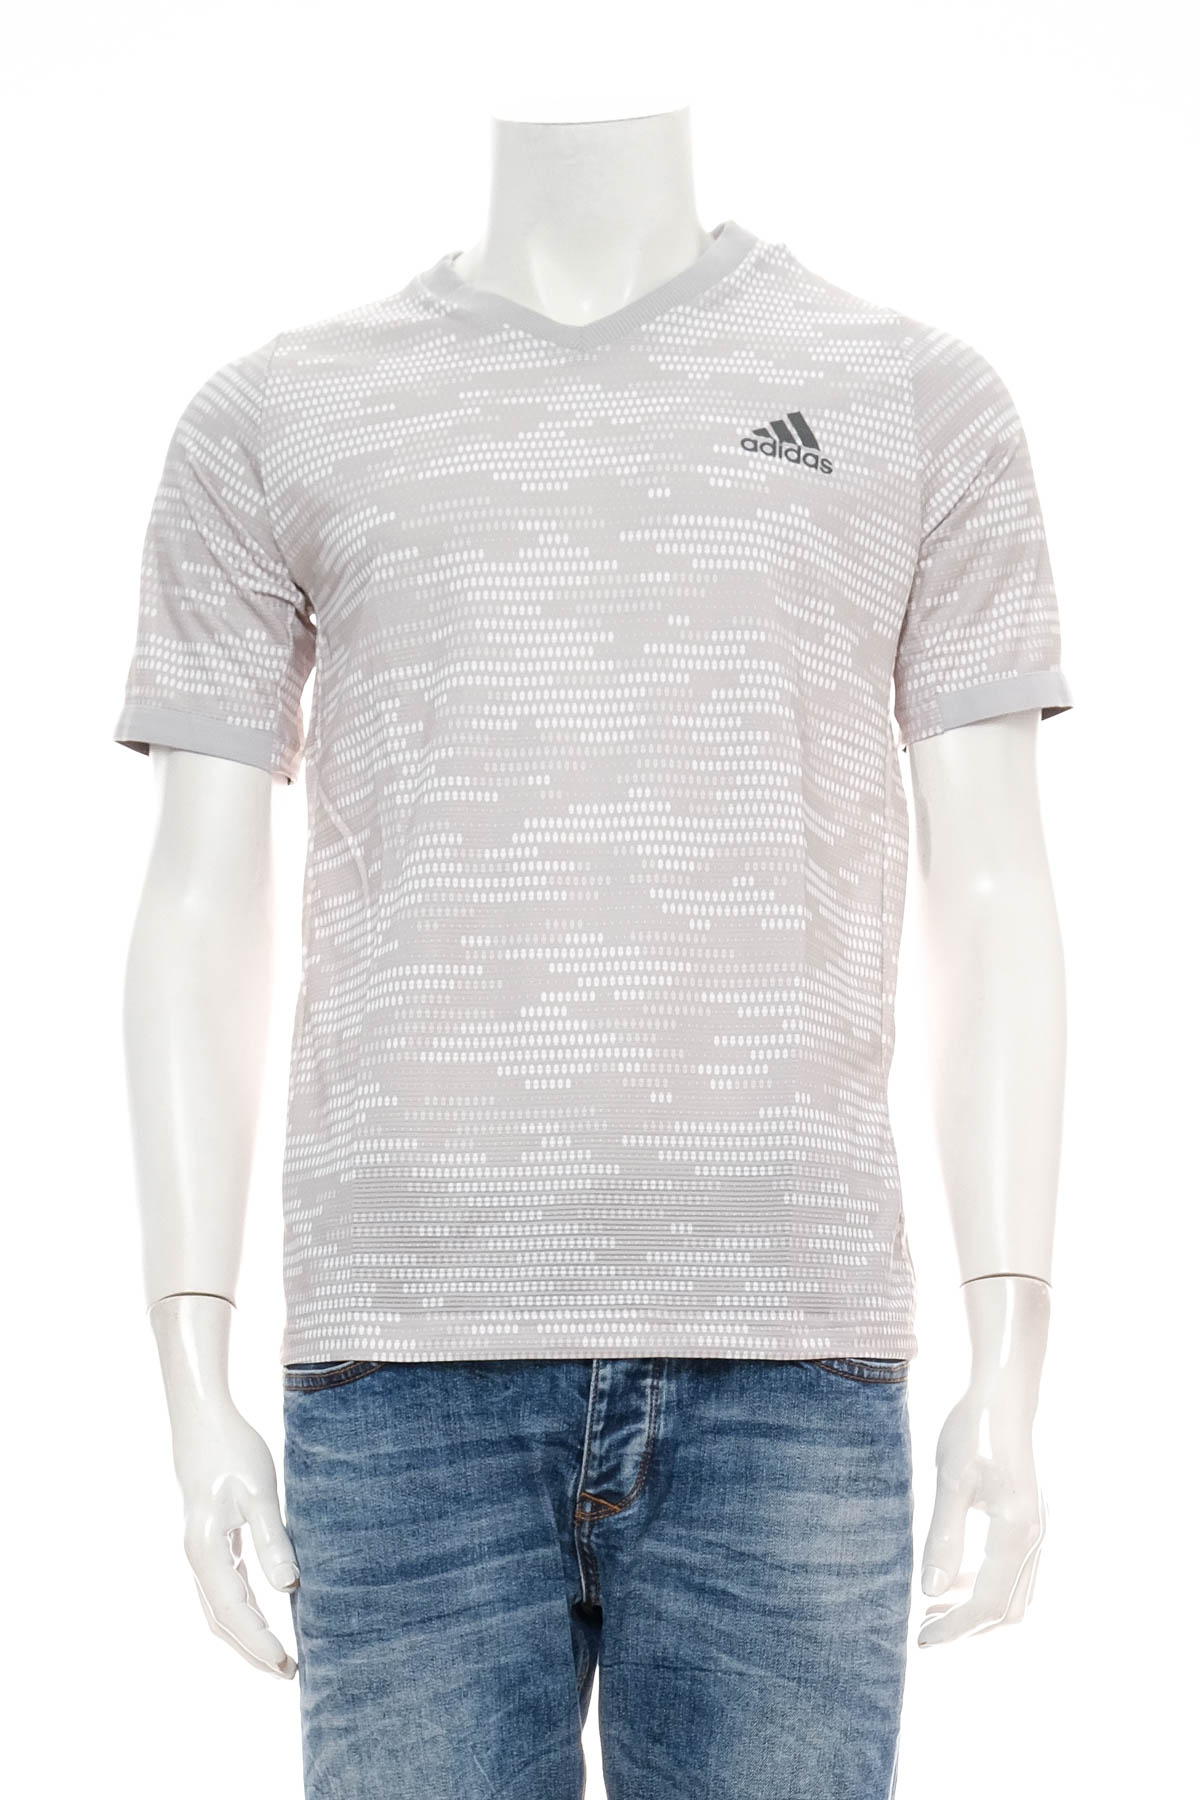 Boy's t-shirt - Adidas - 0